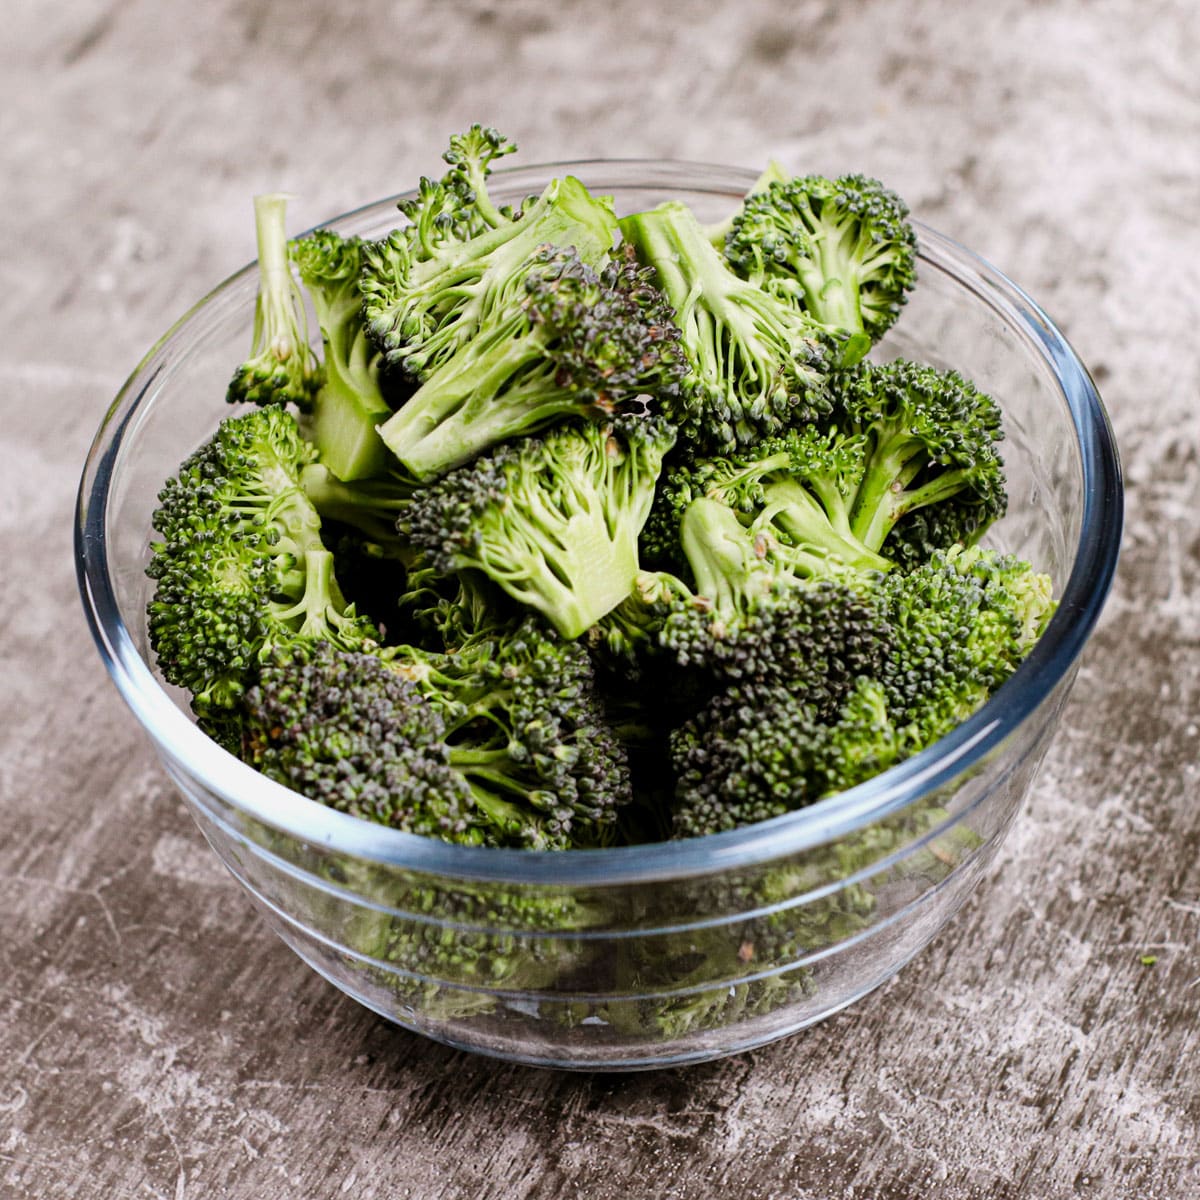 Broccoli florets in a medium glass bowl